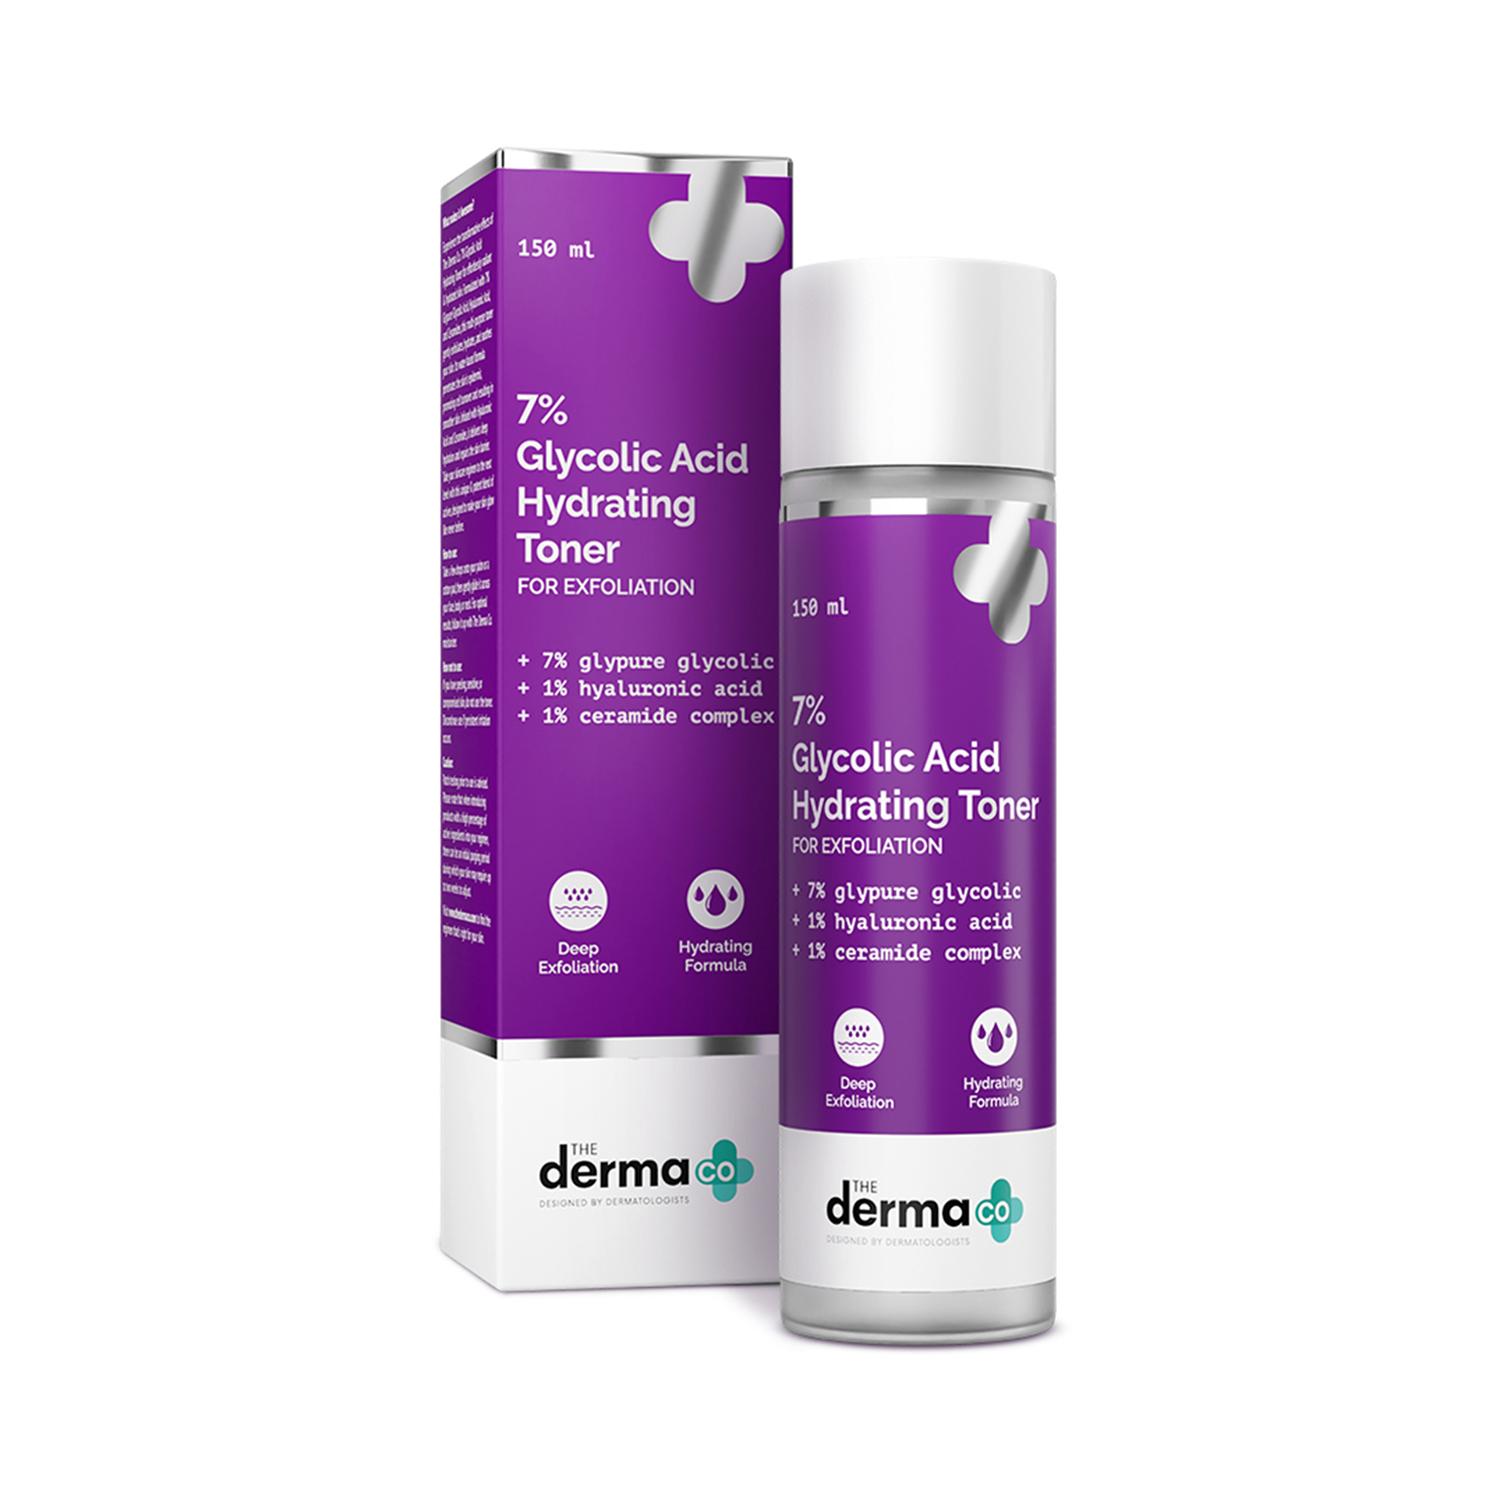 The Derma Co | The Derma Co Glycolic Acid 7% Hydrating Toner with Glycolic Acid & Hyaluronic Acid (150 ml)